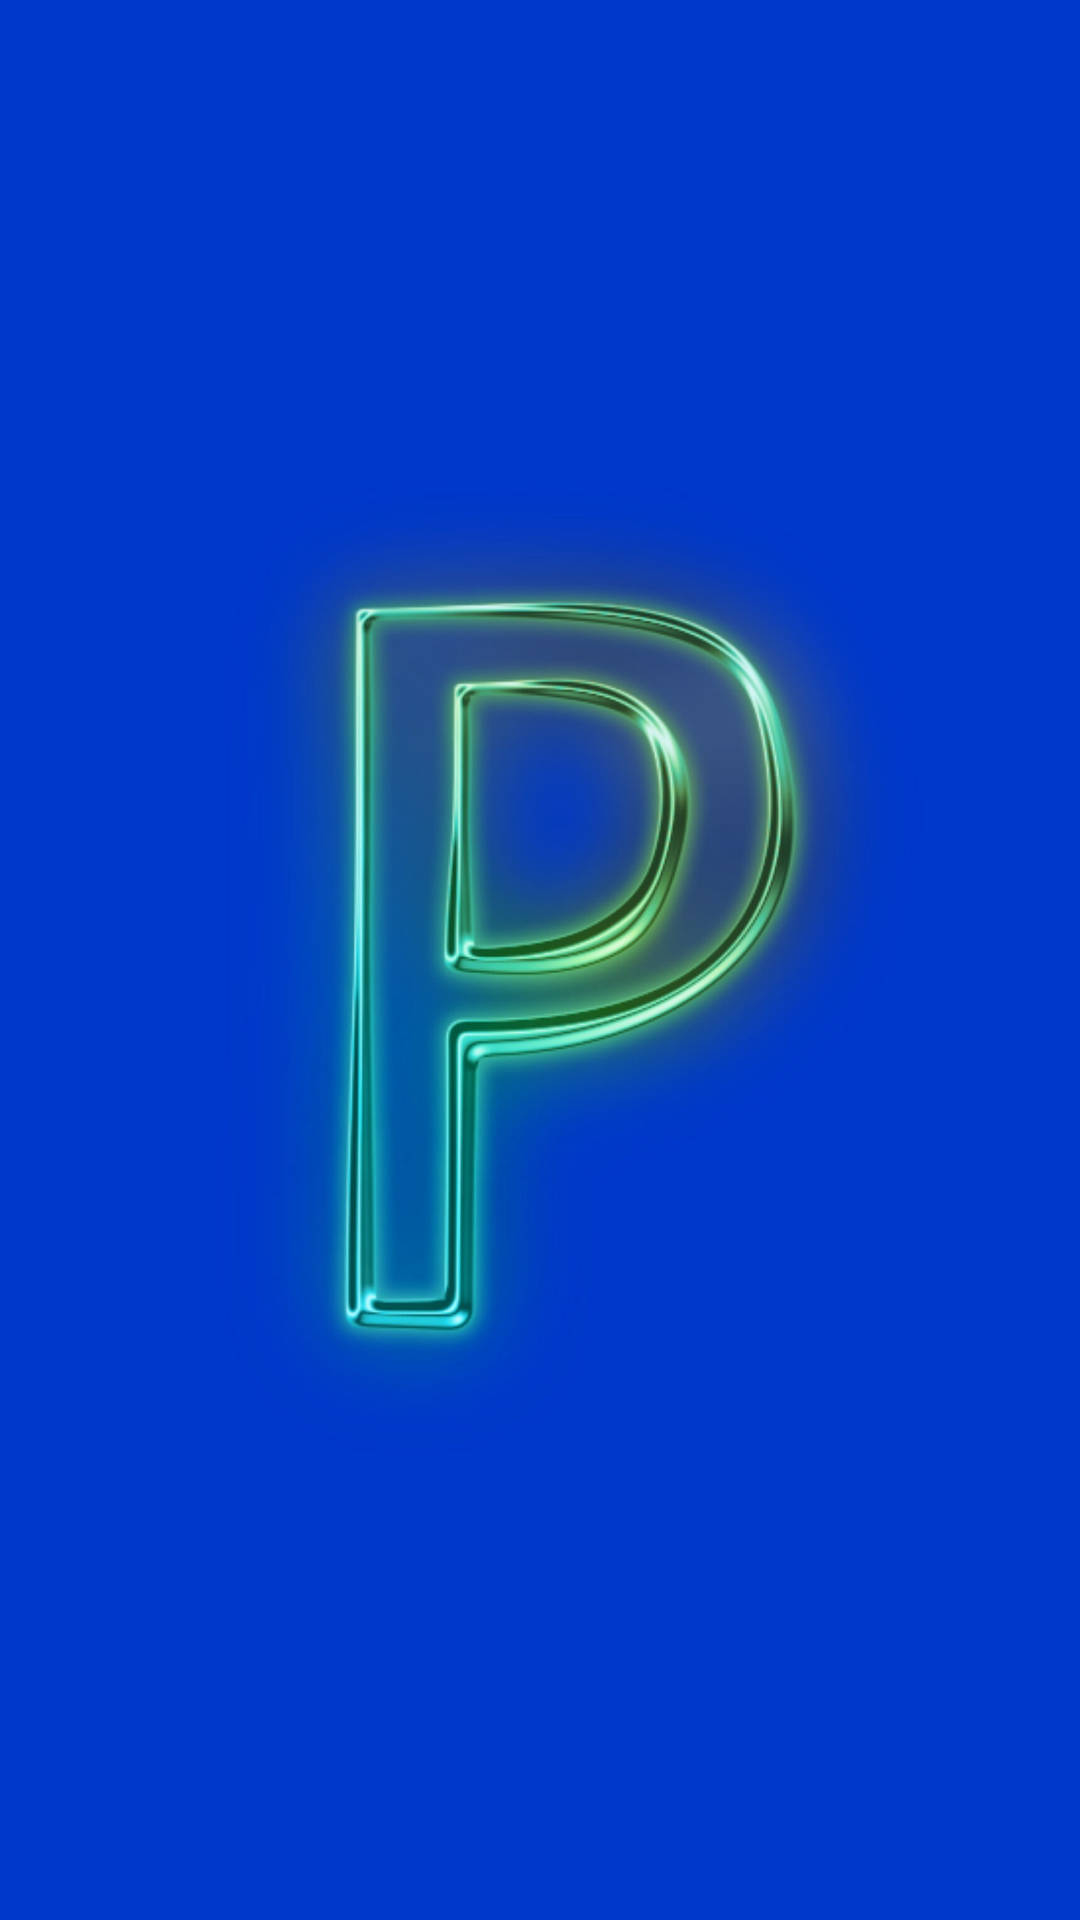 Blue P Letter Background